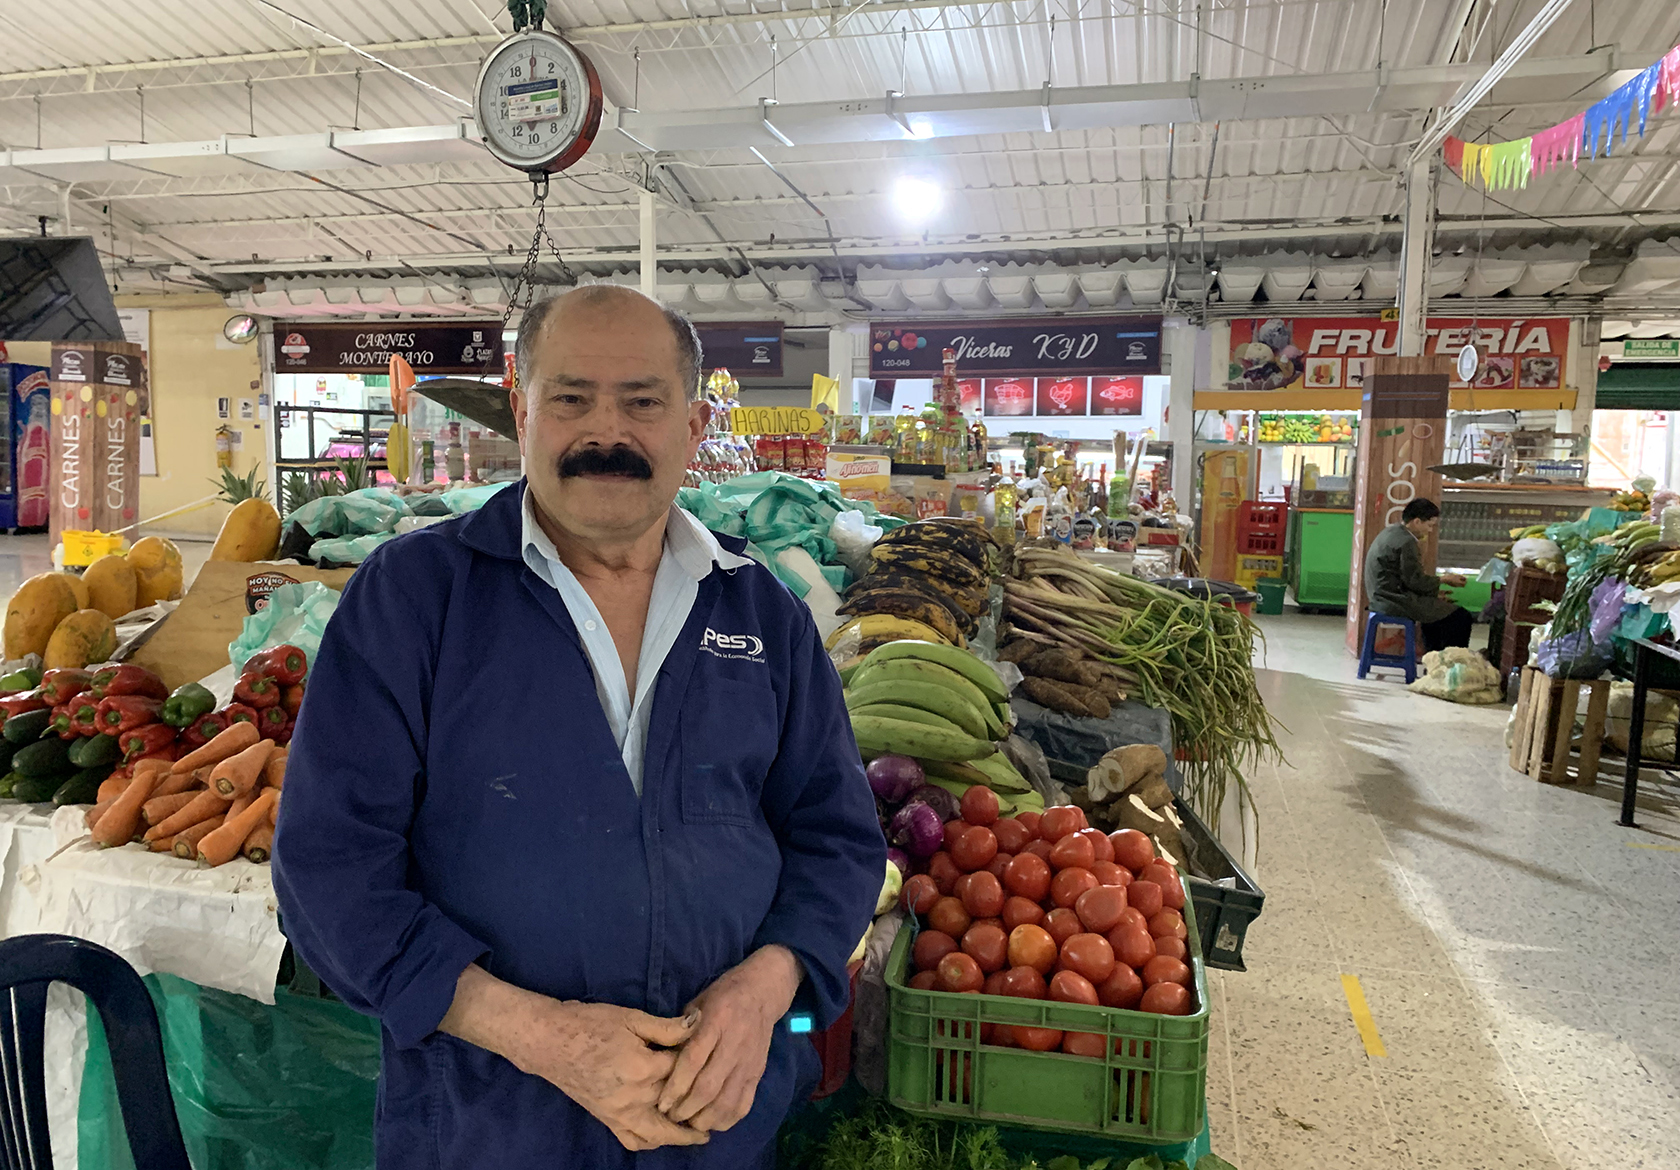 Hernan, a vendor of fresh fruit and vegetables